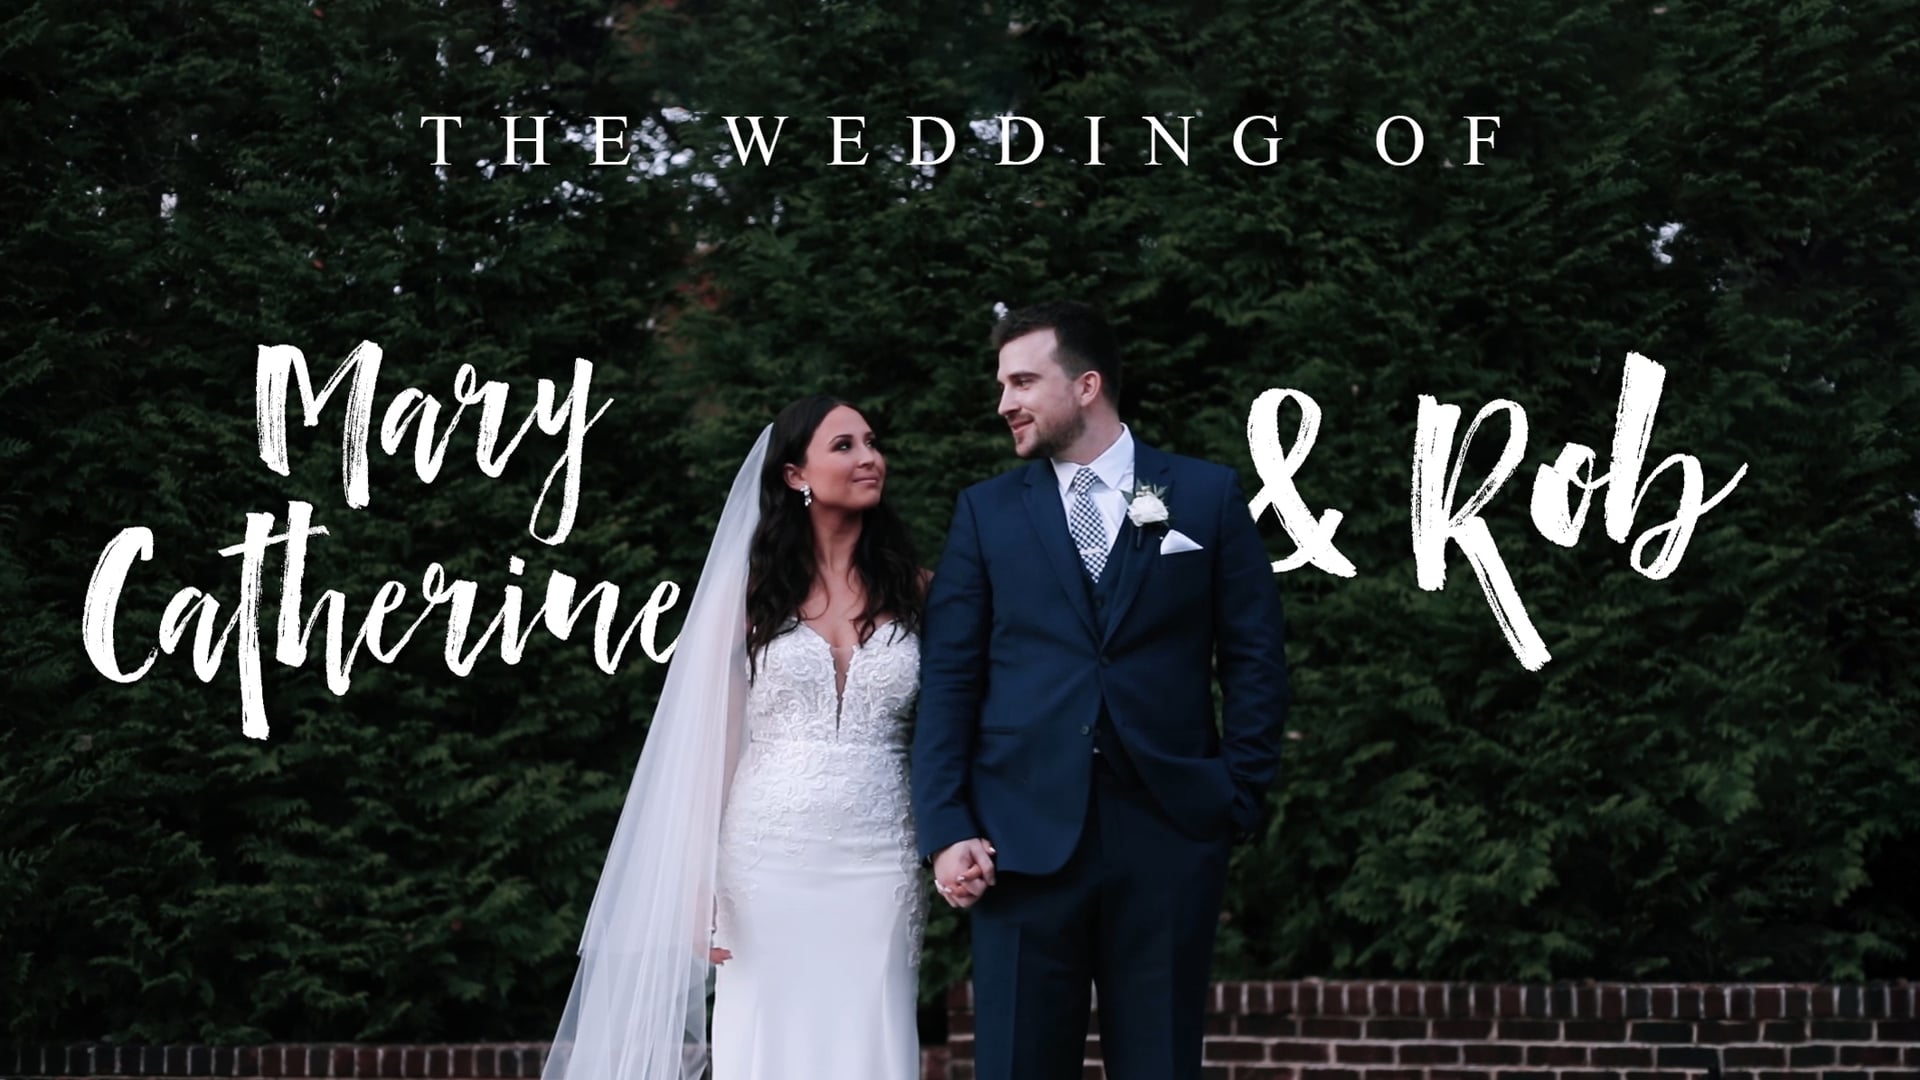 Rob + Mary Catherine's Wedding Trailer